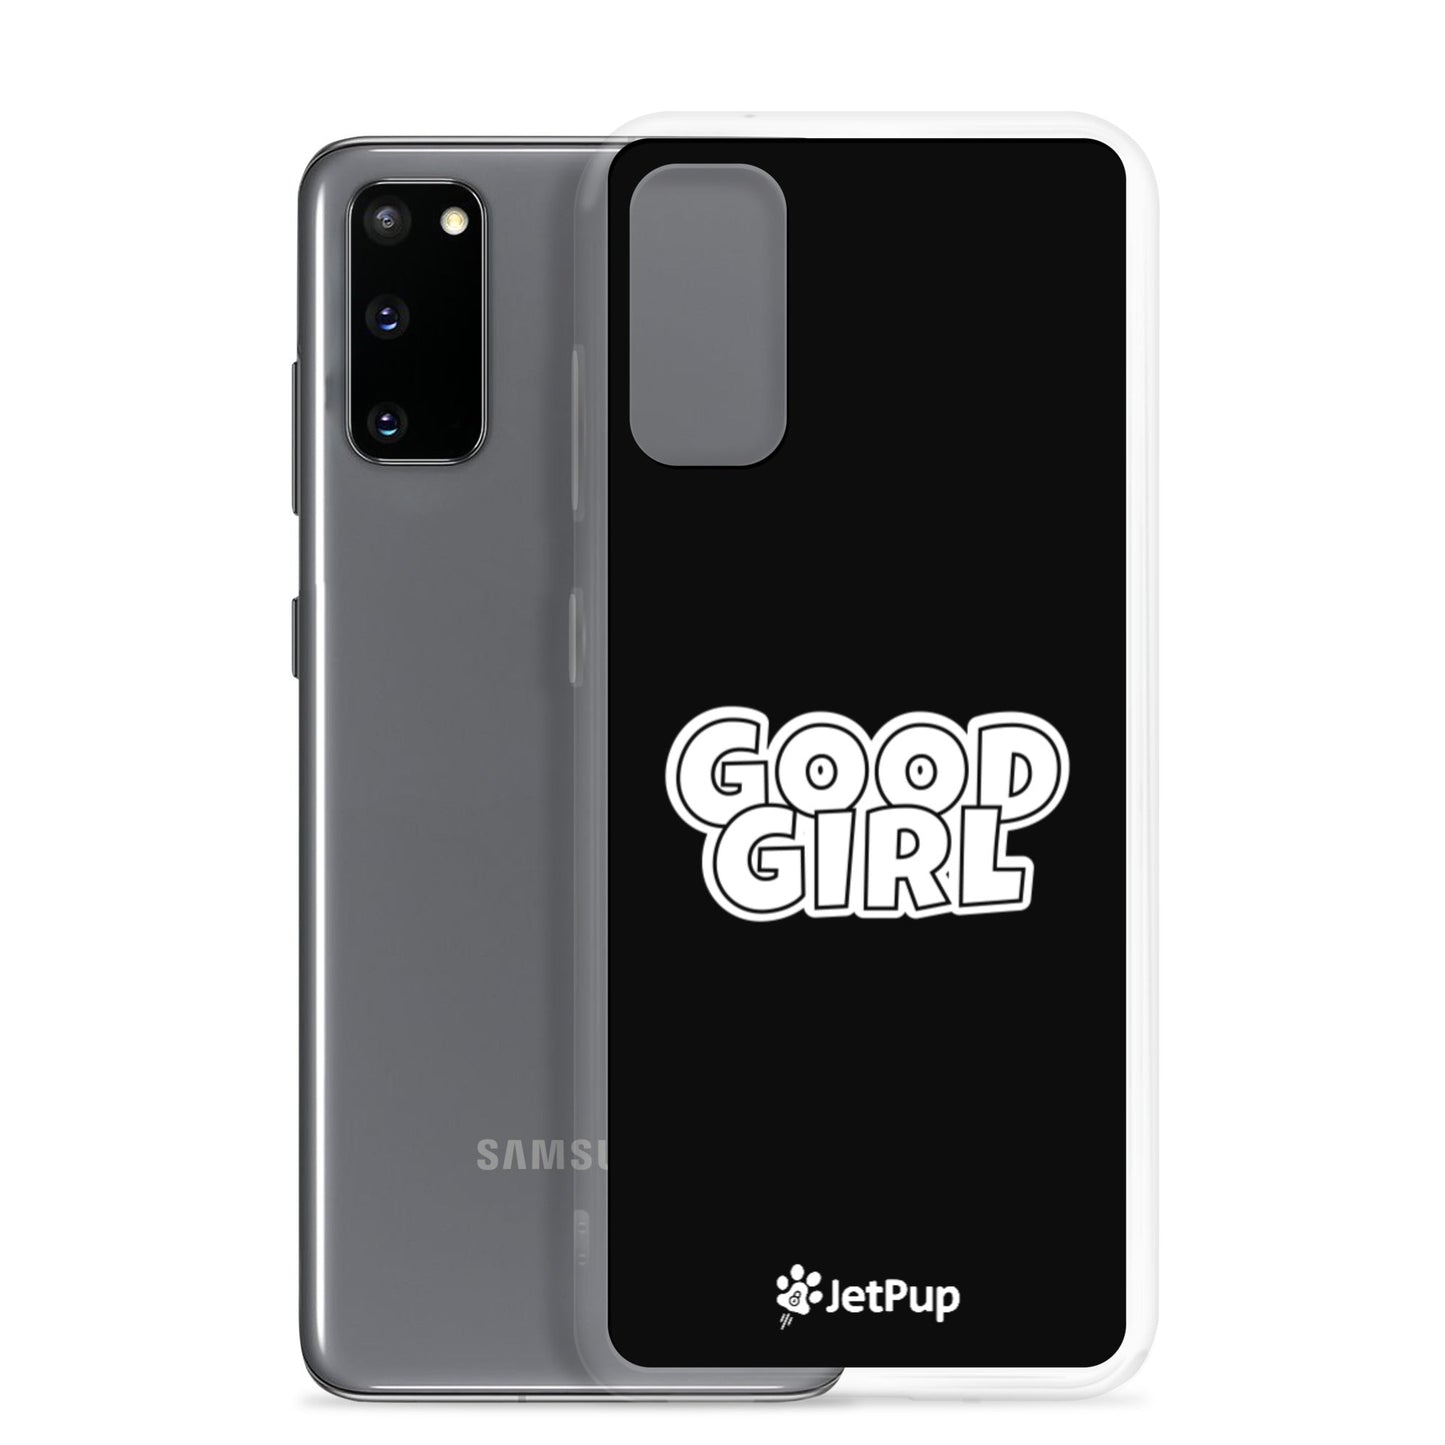 Good Girl Samsung Case - Black - JetPup